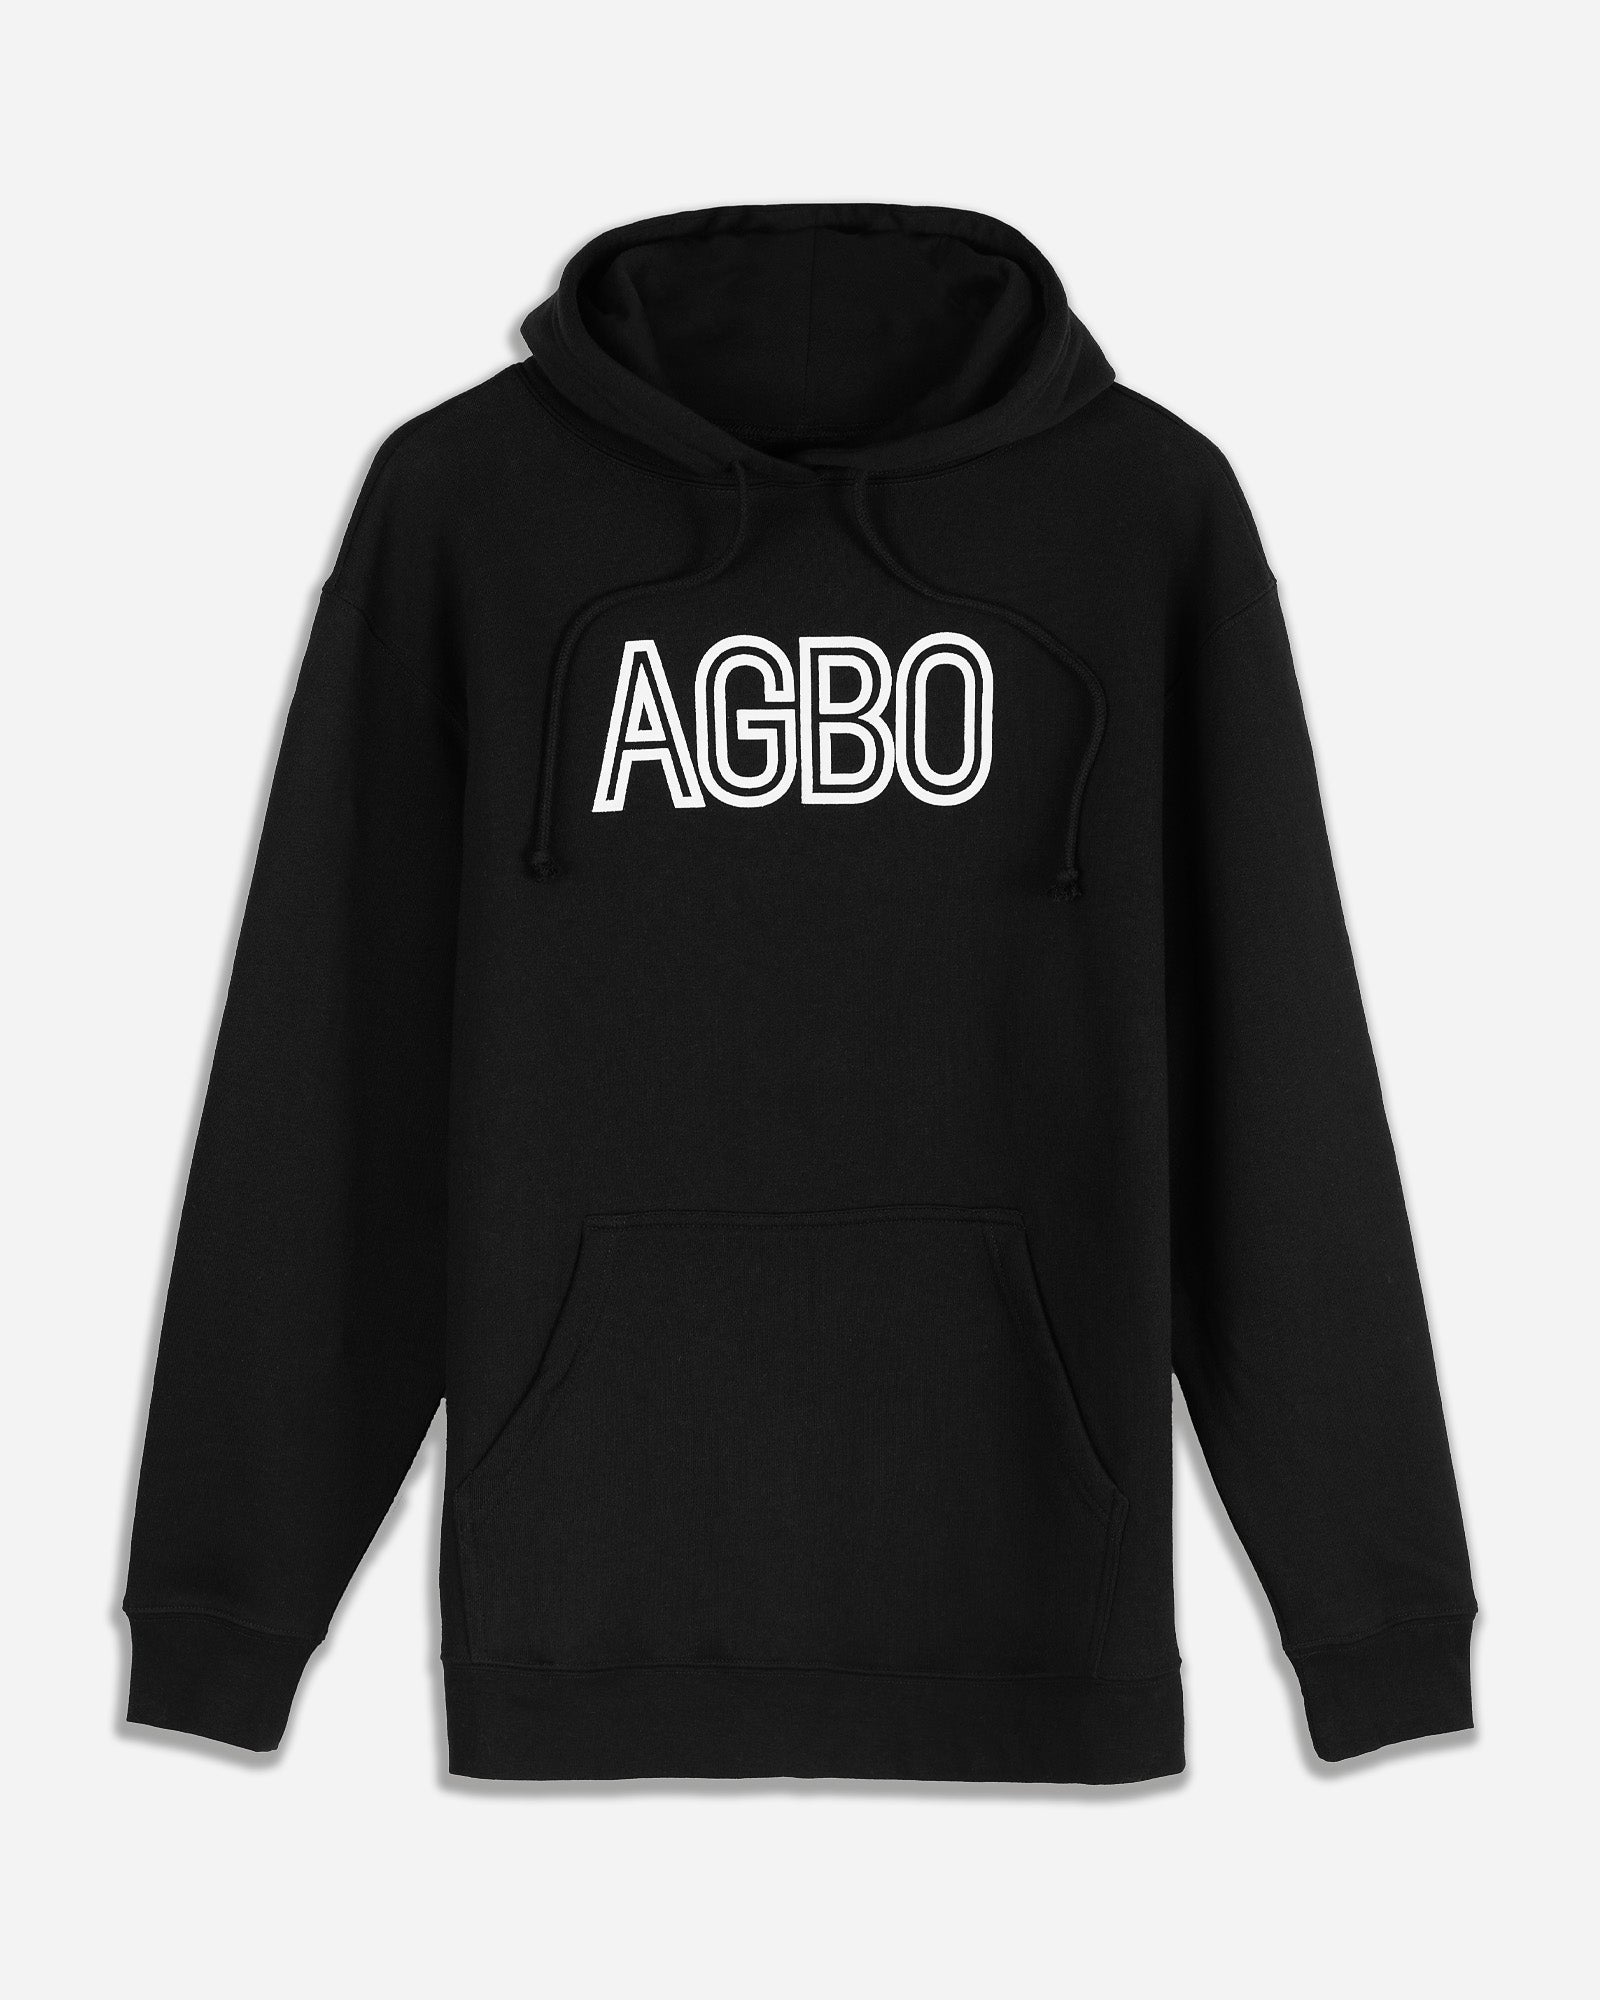 White Logo AGBO Hooded Sweatshirt